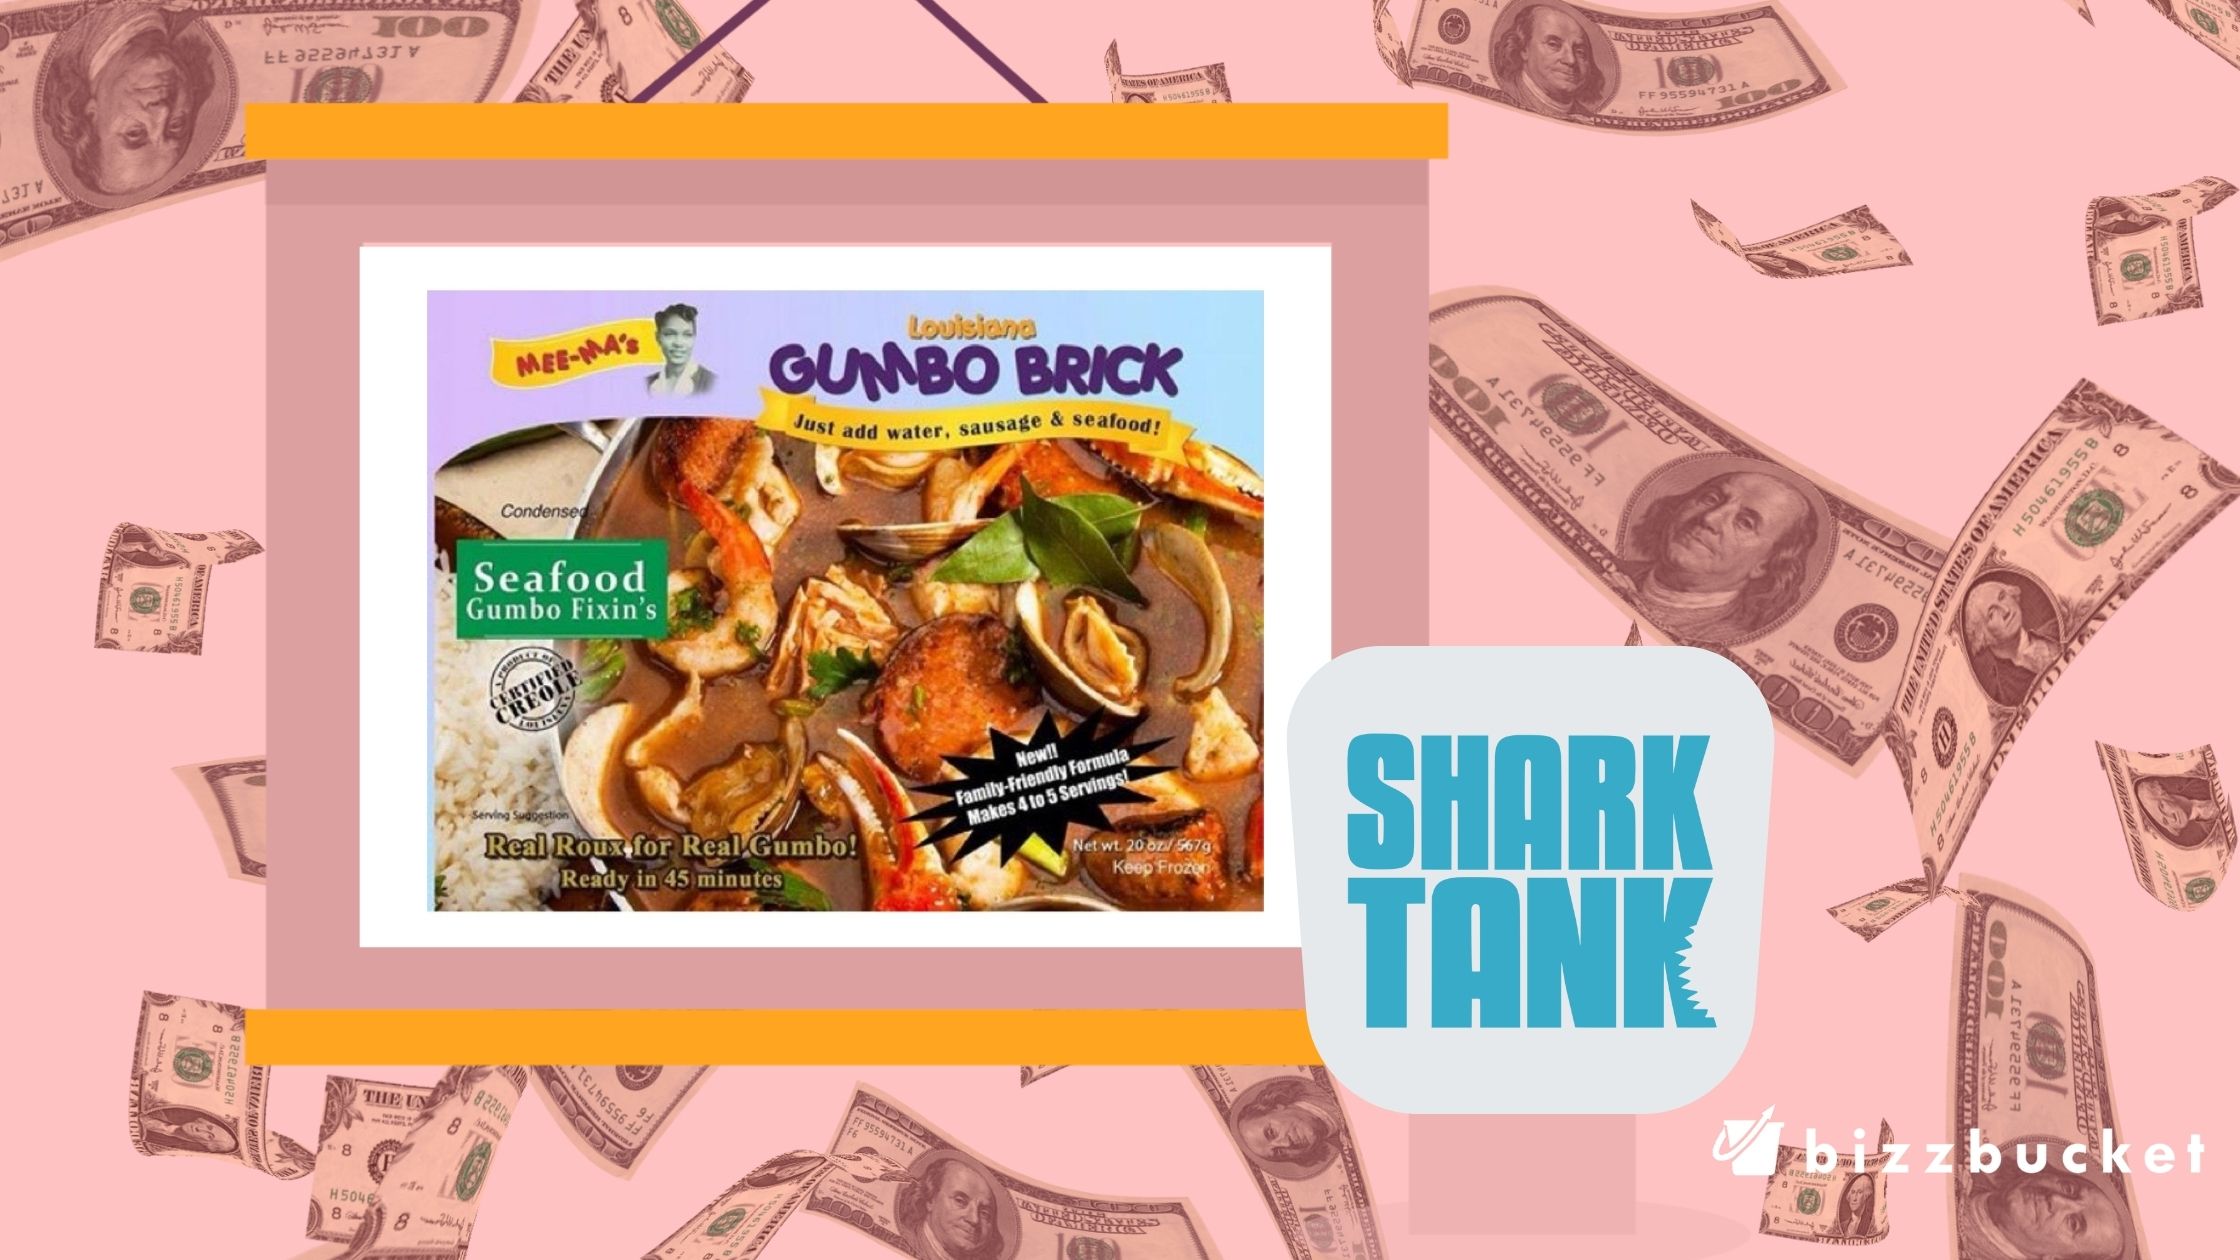 Mee-Ma’s Louisiana Gumbo brick shark tank update